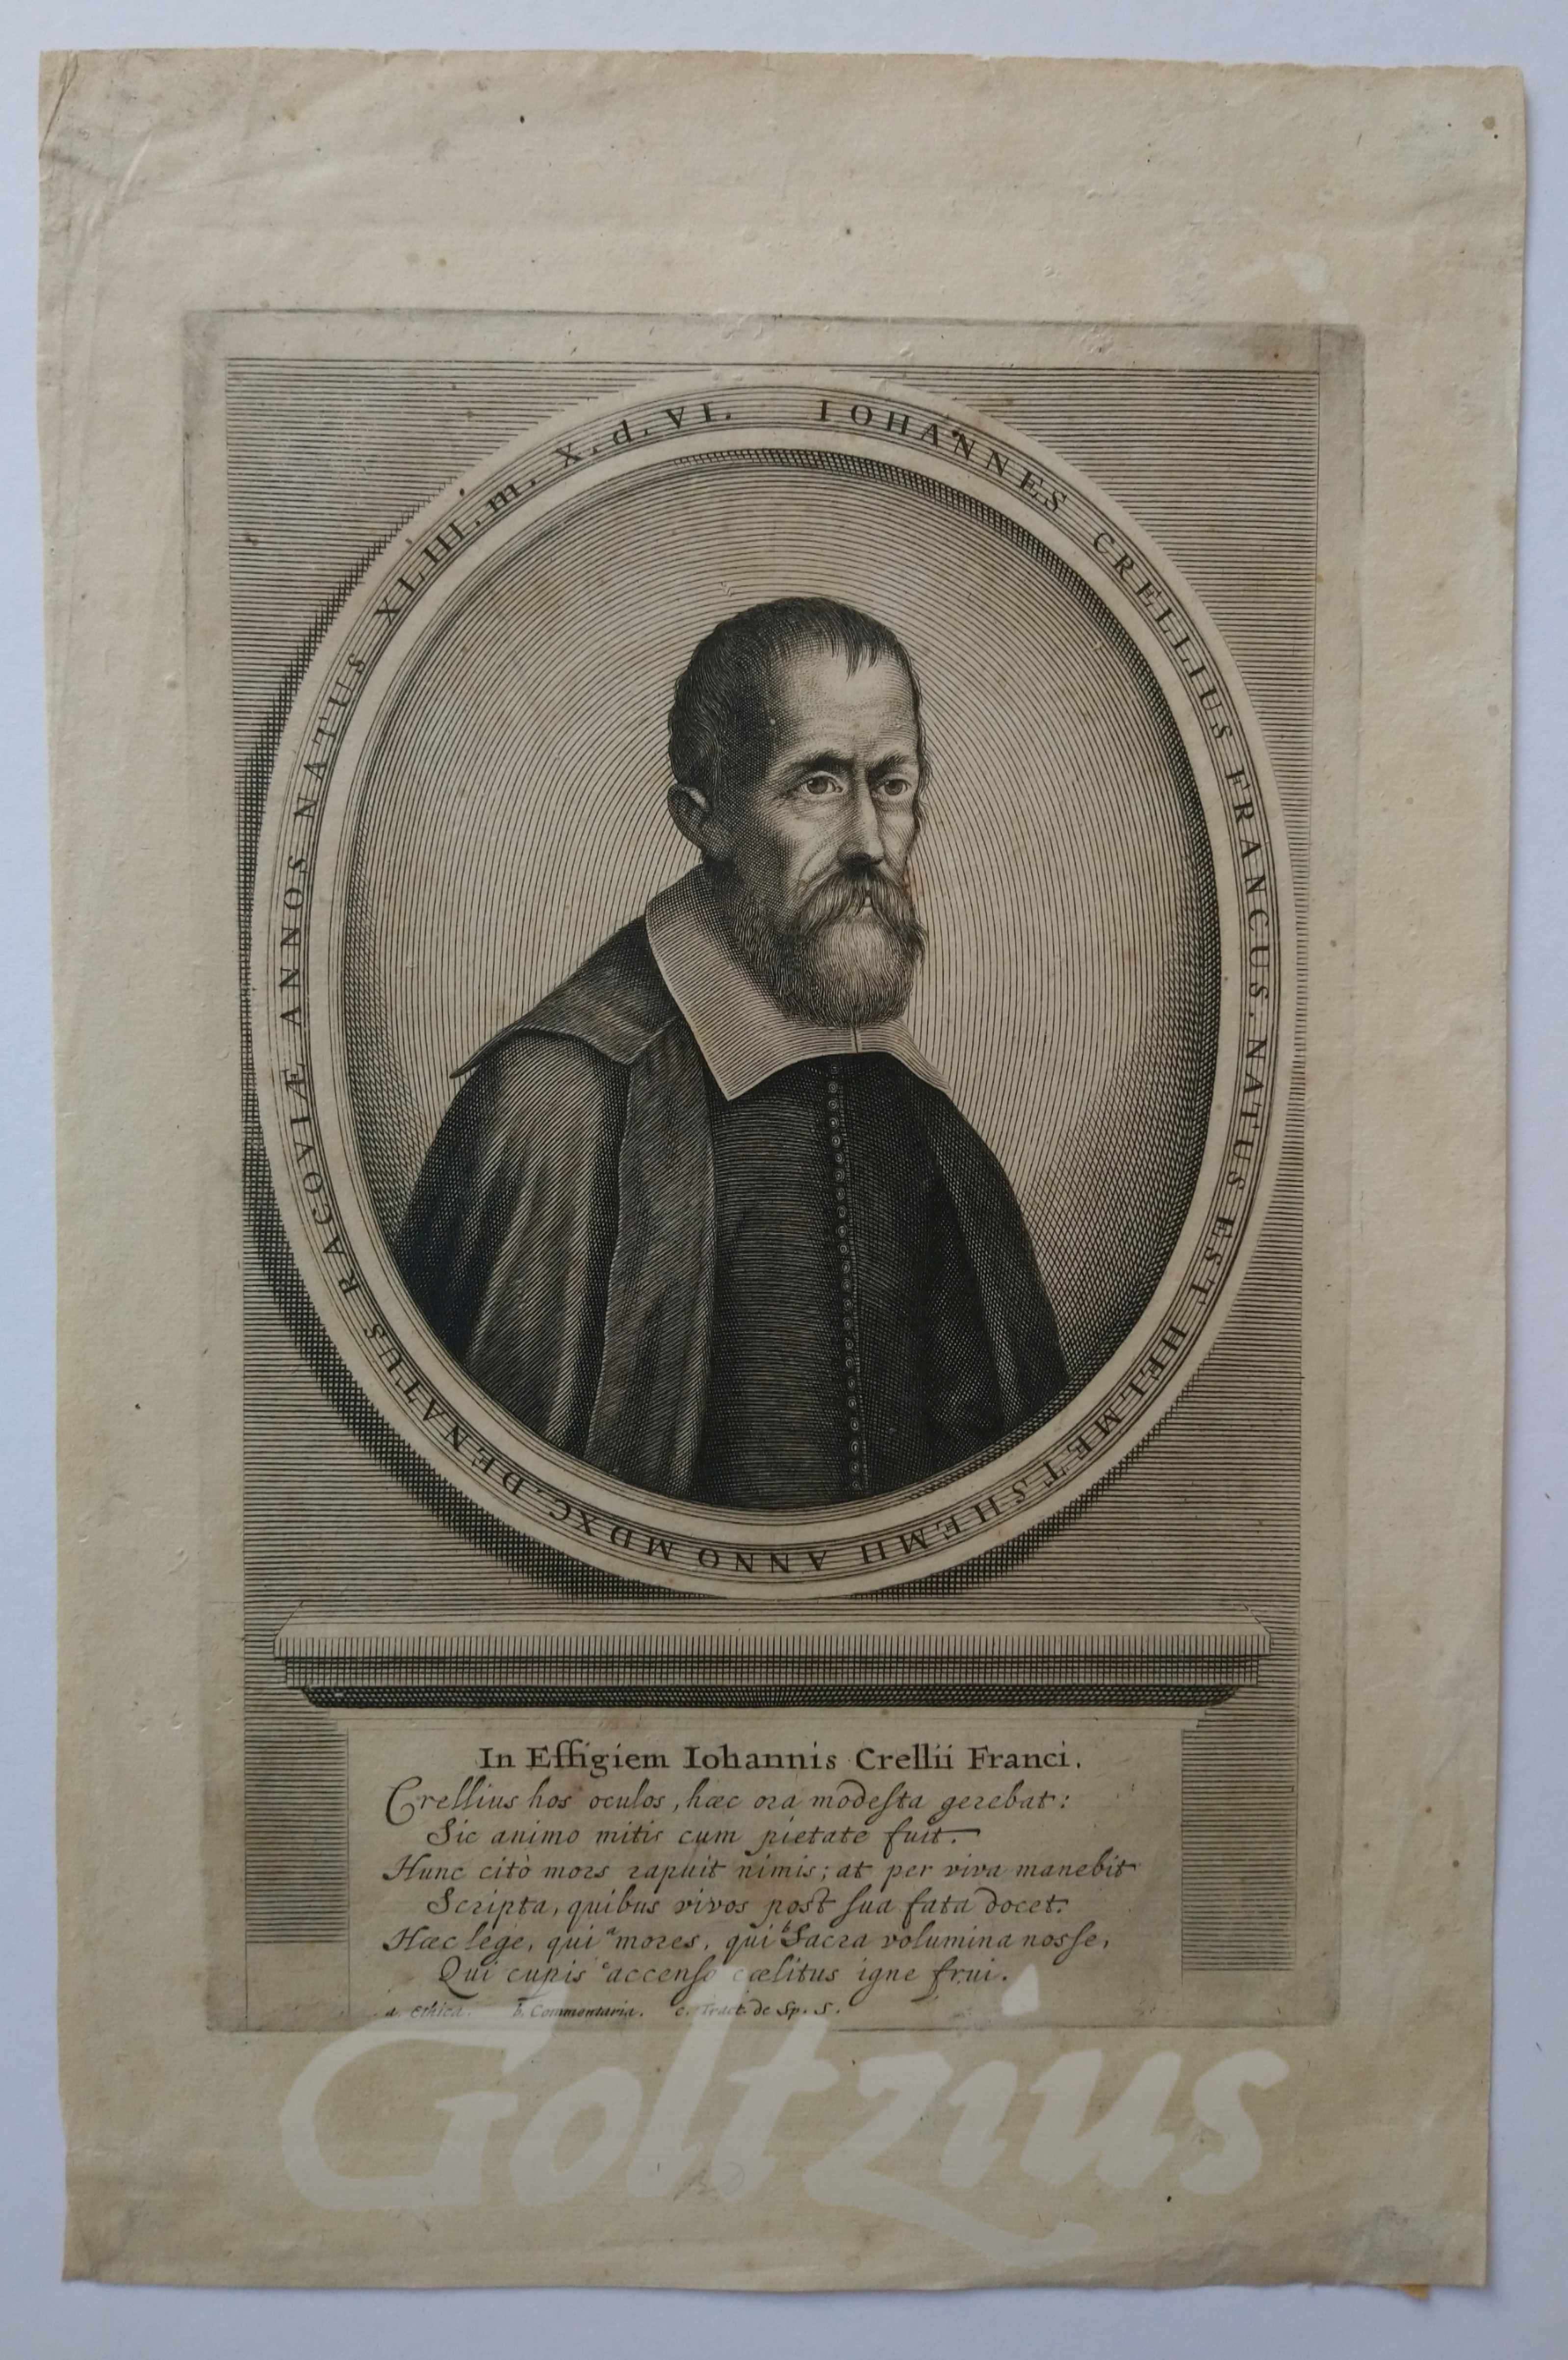 VISSCHER, LAMBERT, Johannes Crellius Francus